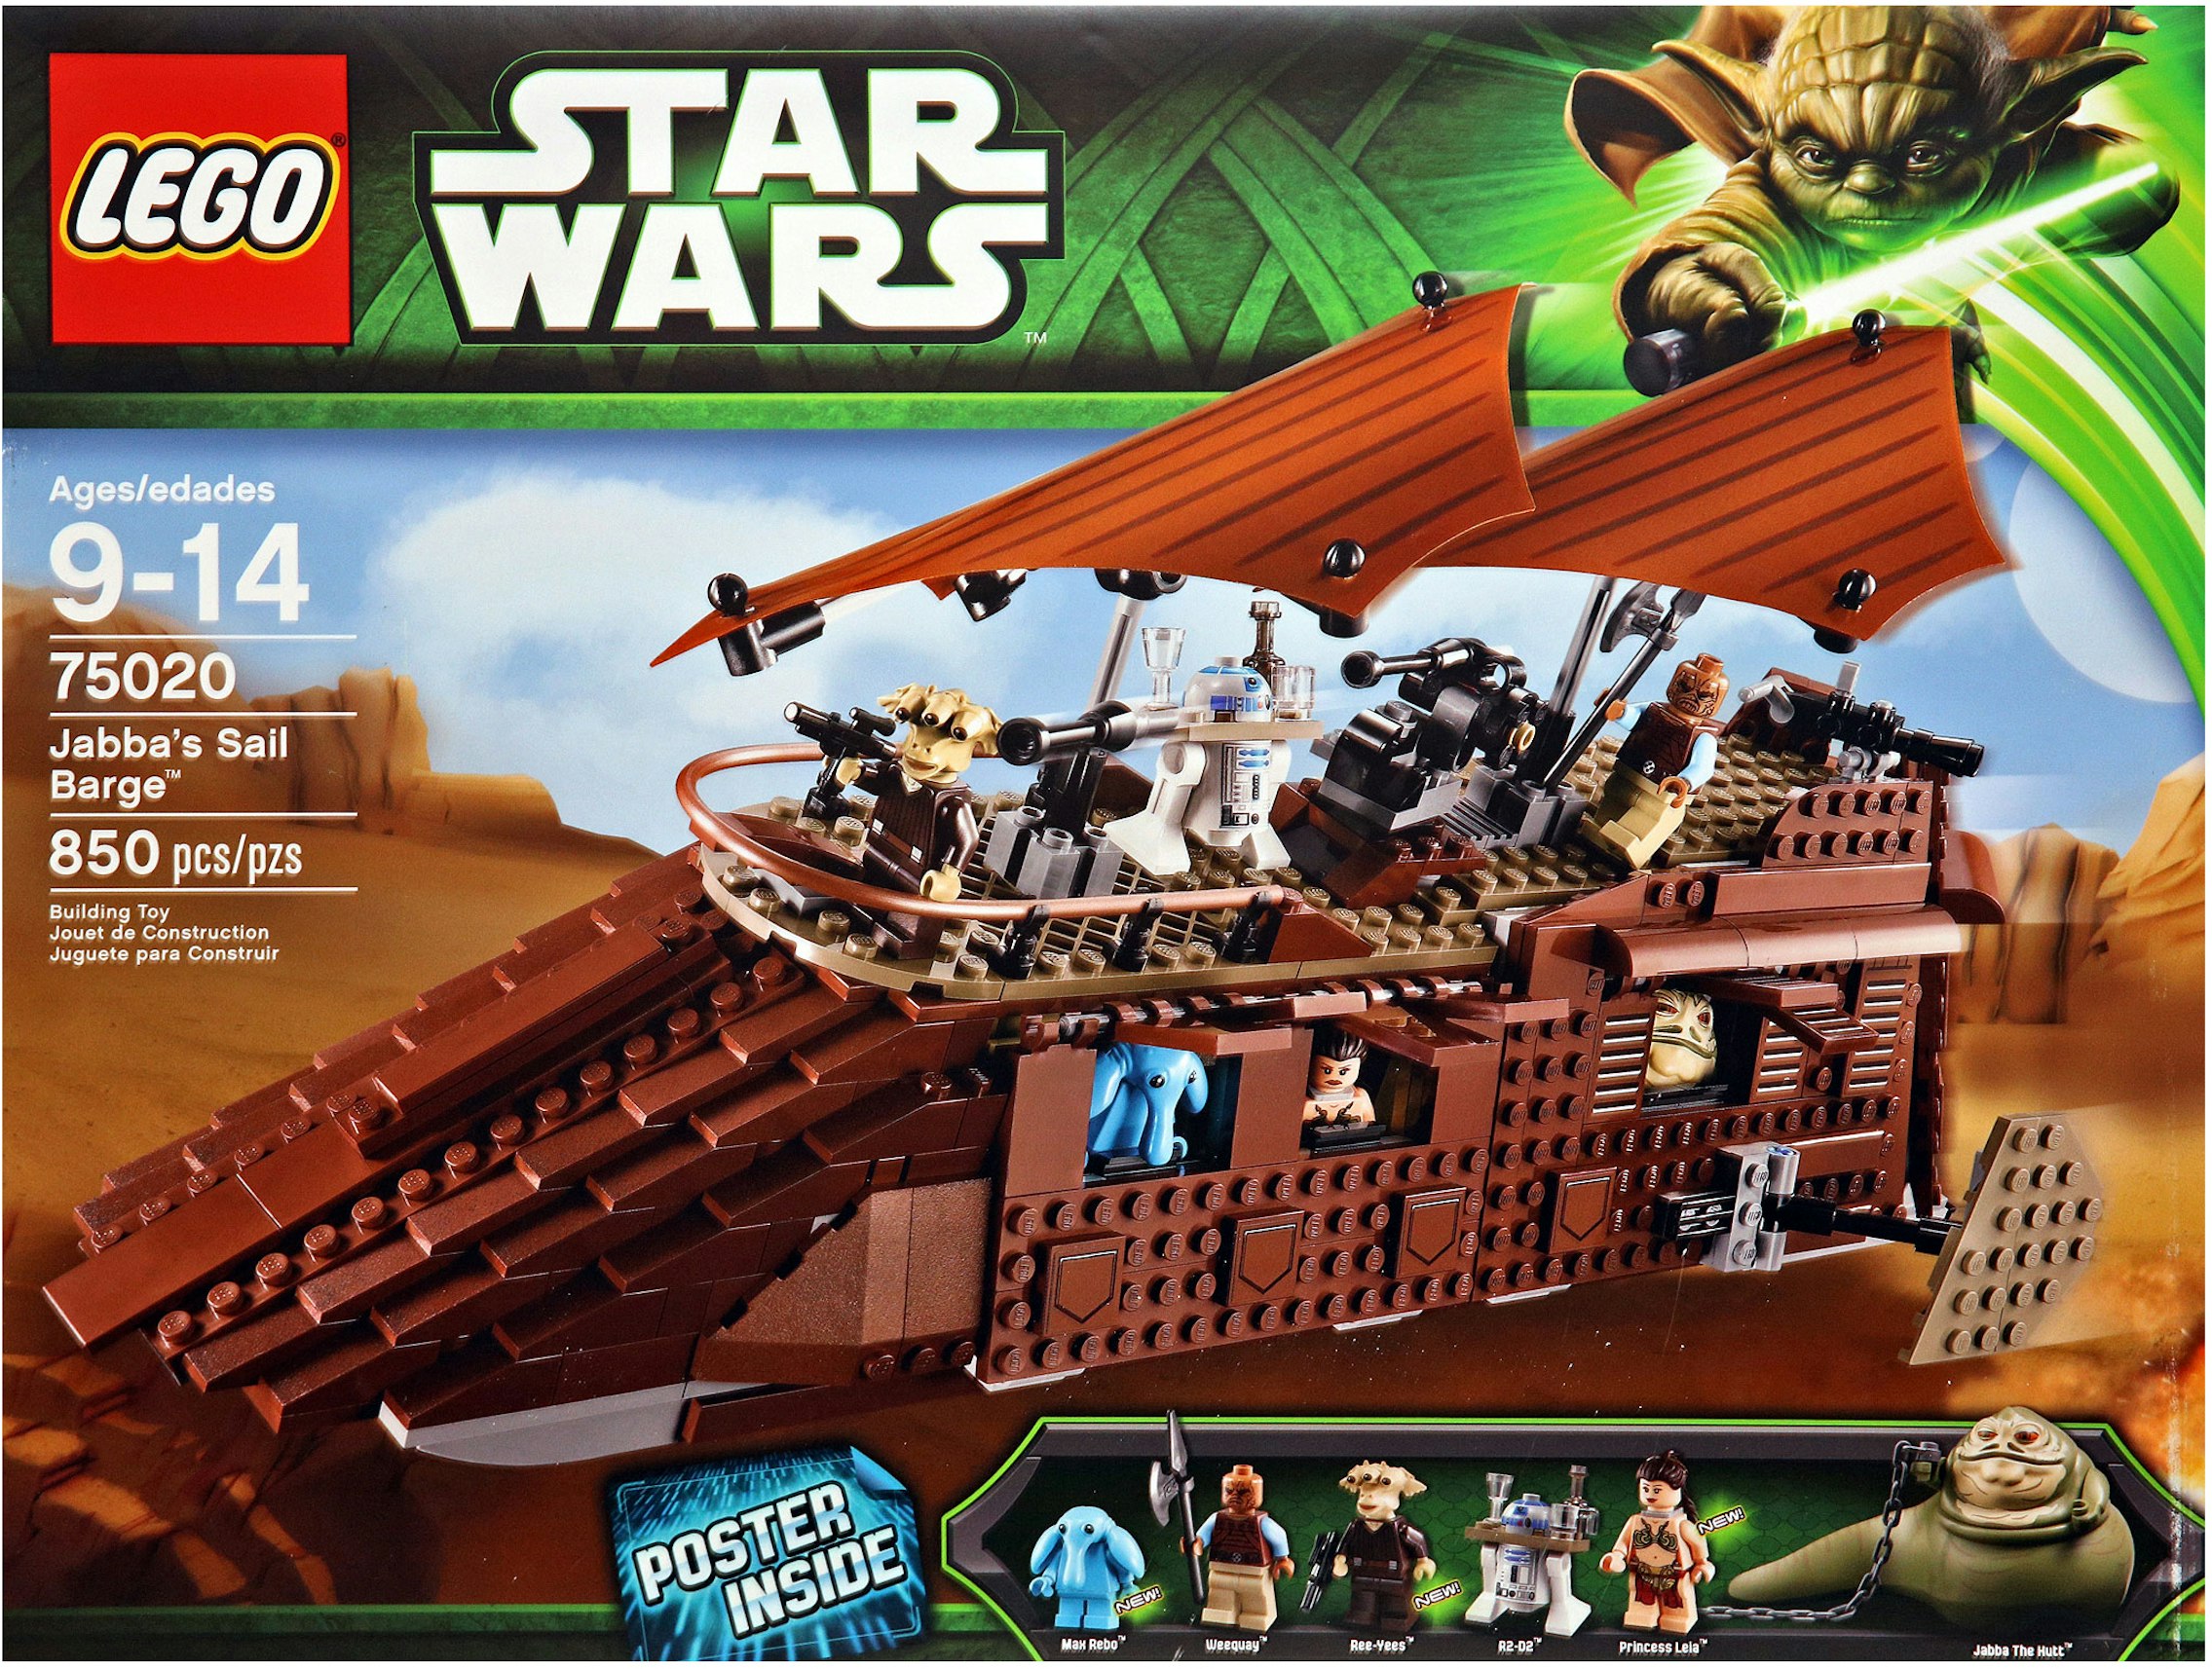 LEGO Wars Jabba's Sail Barge Set 75020 - US